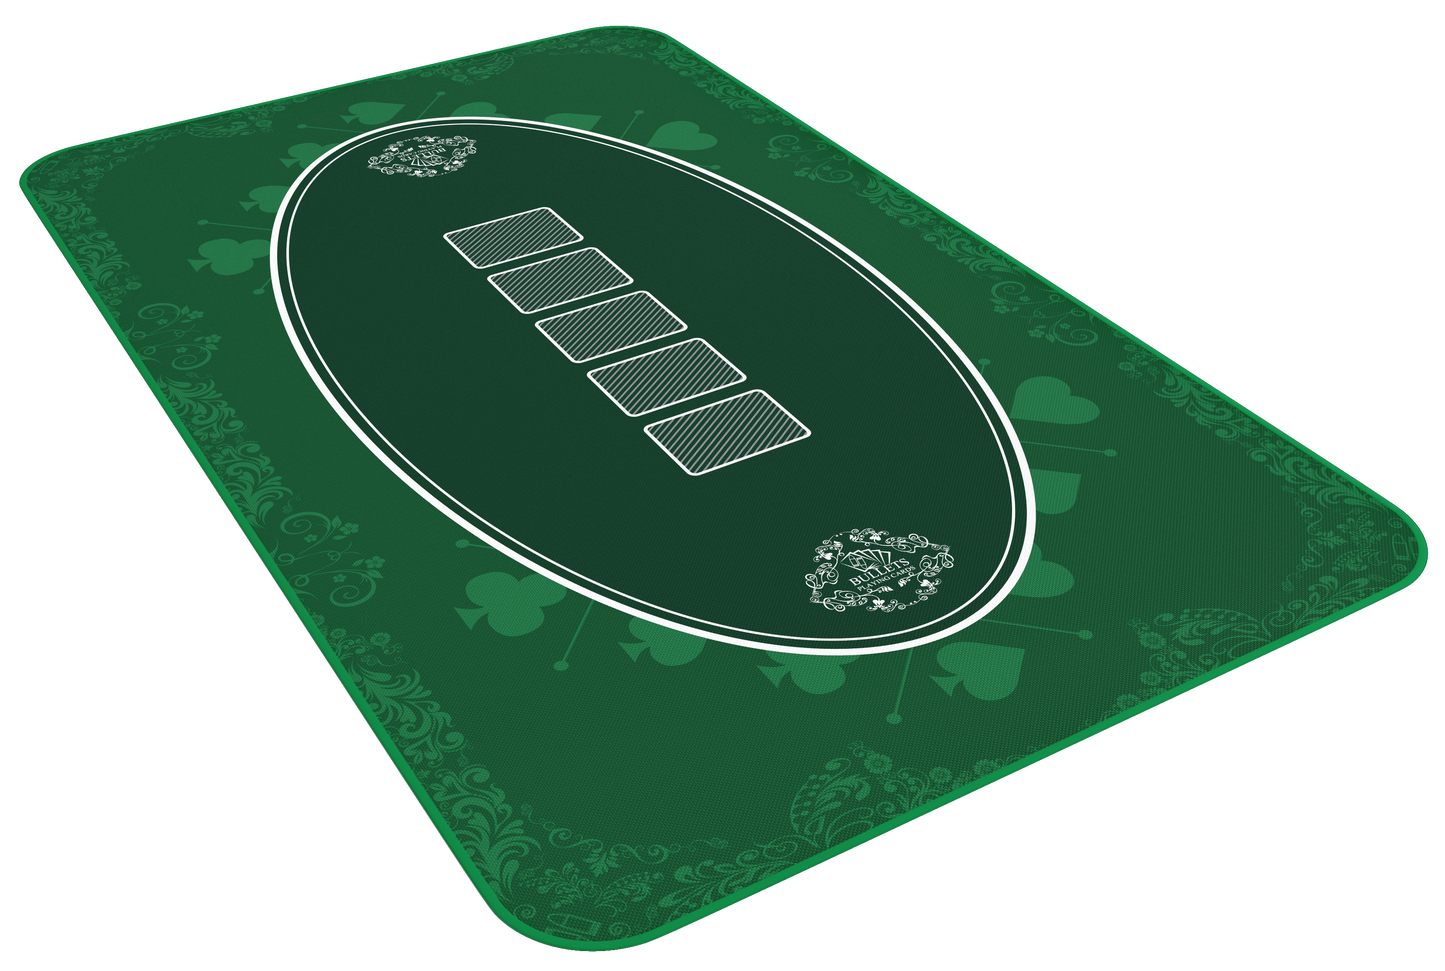 Poker mat 140x75 cm, square - casino design -